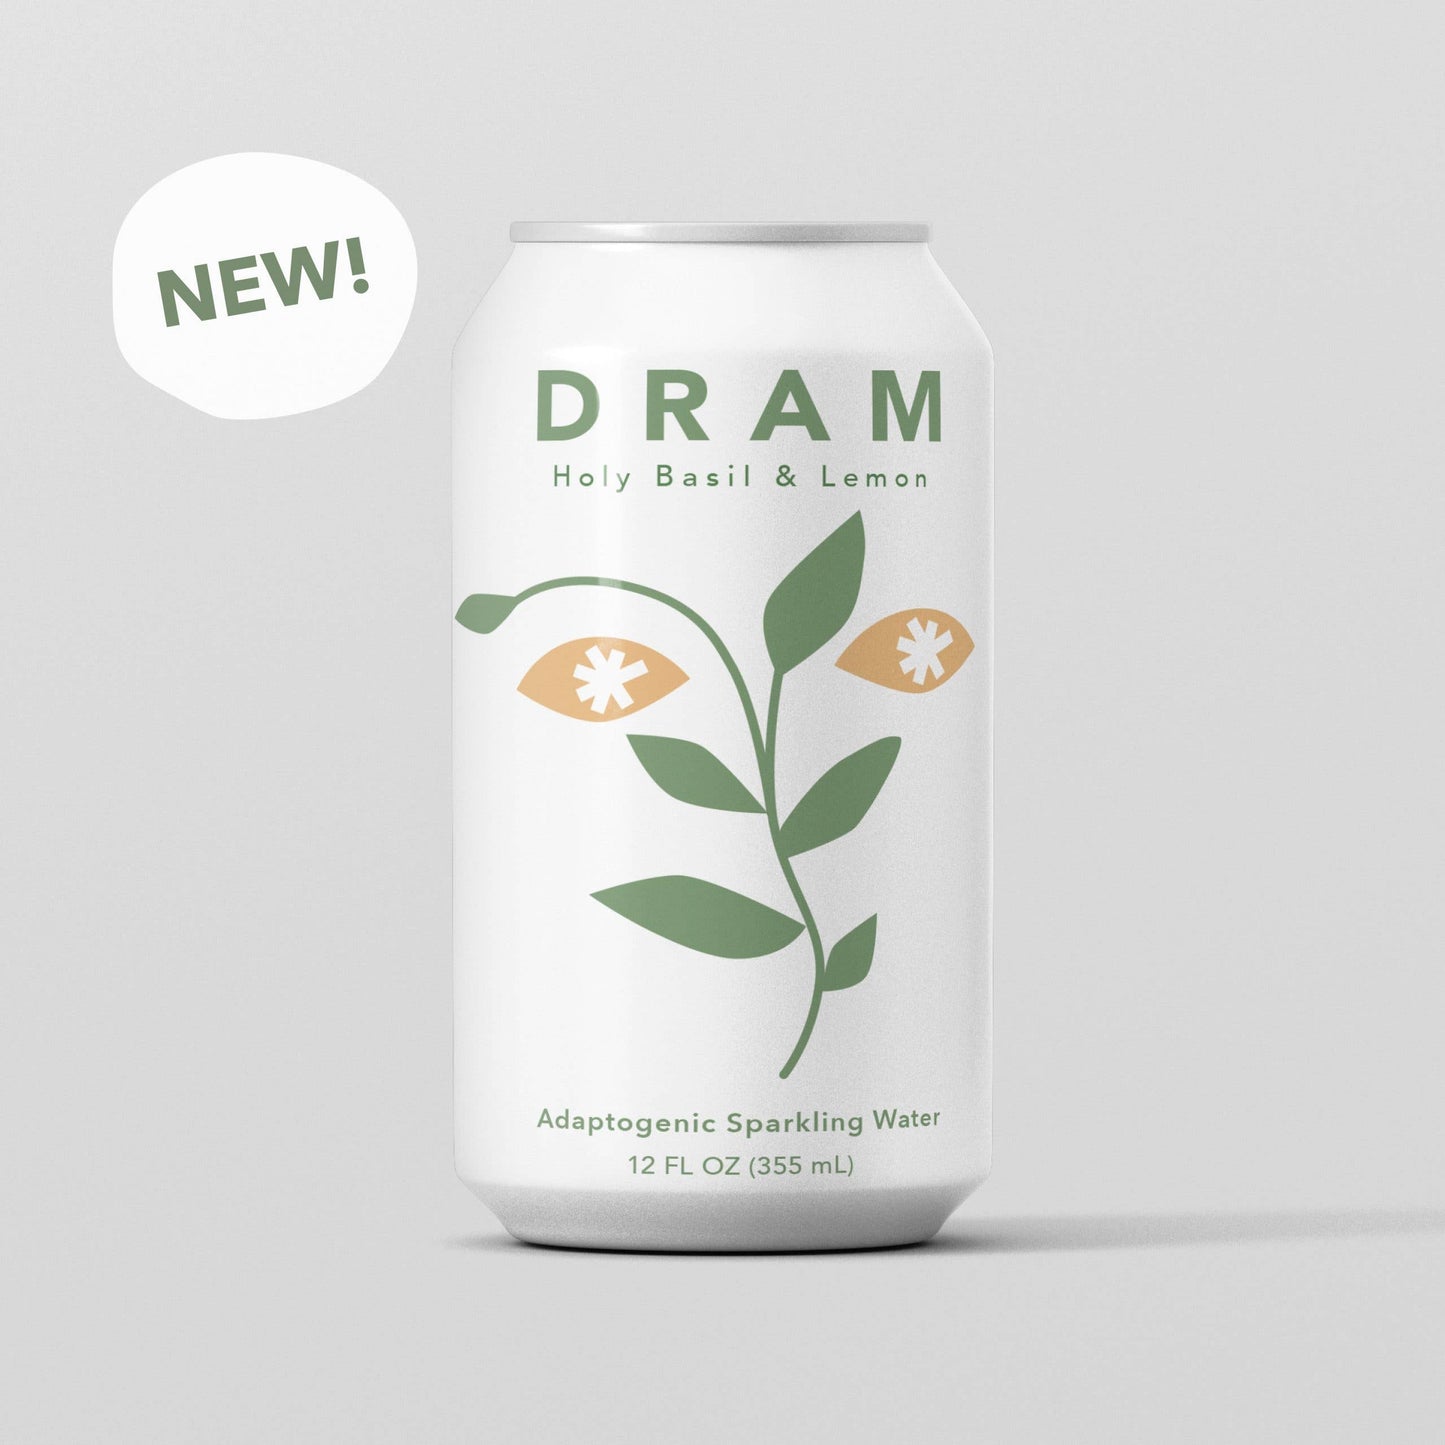 DRAM - Holy Basil & Lemon Adaptogenic Sparkling Water